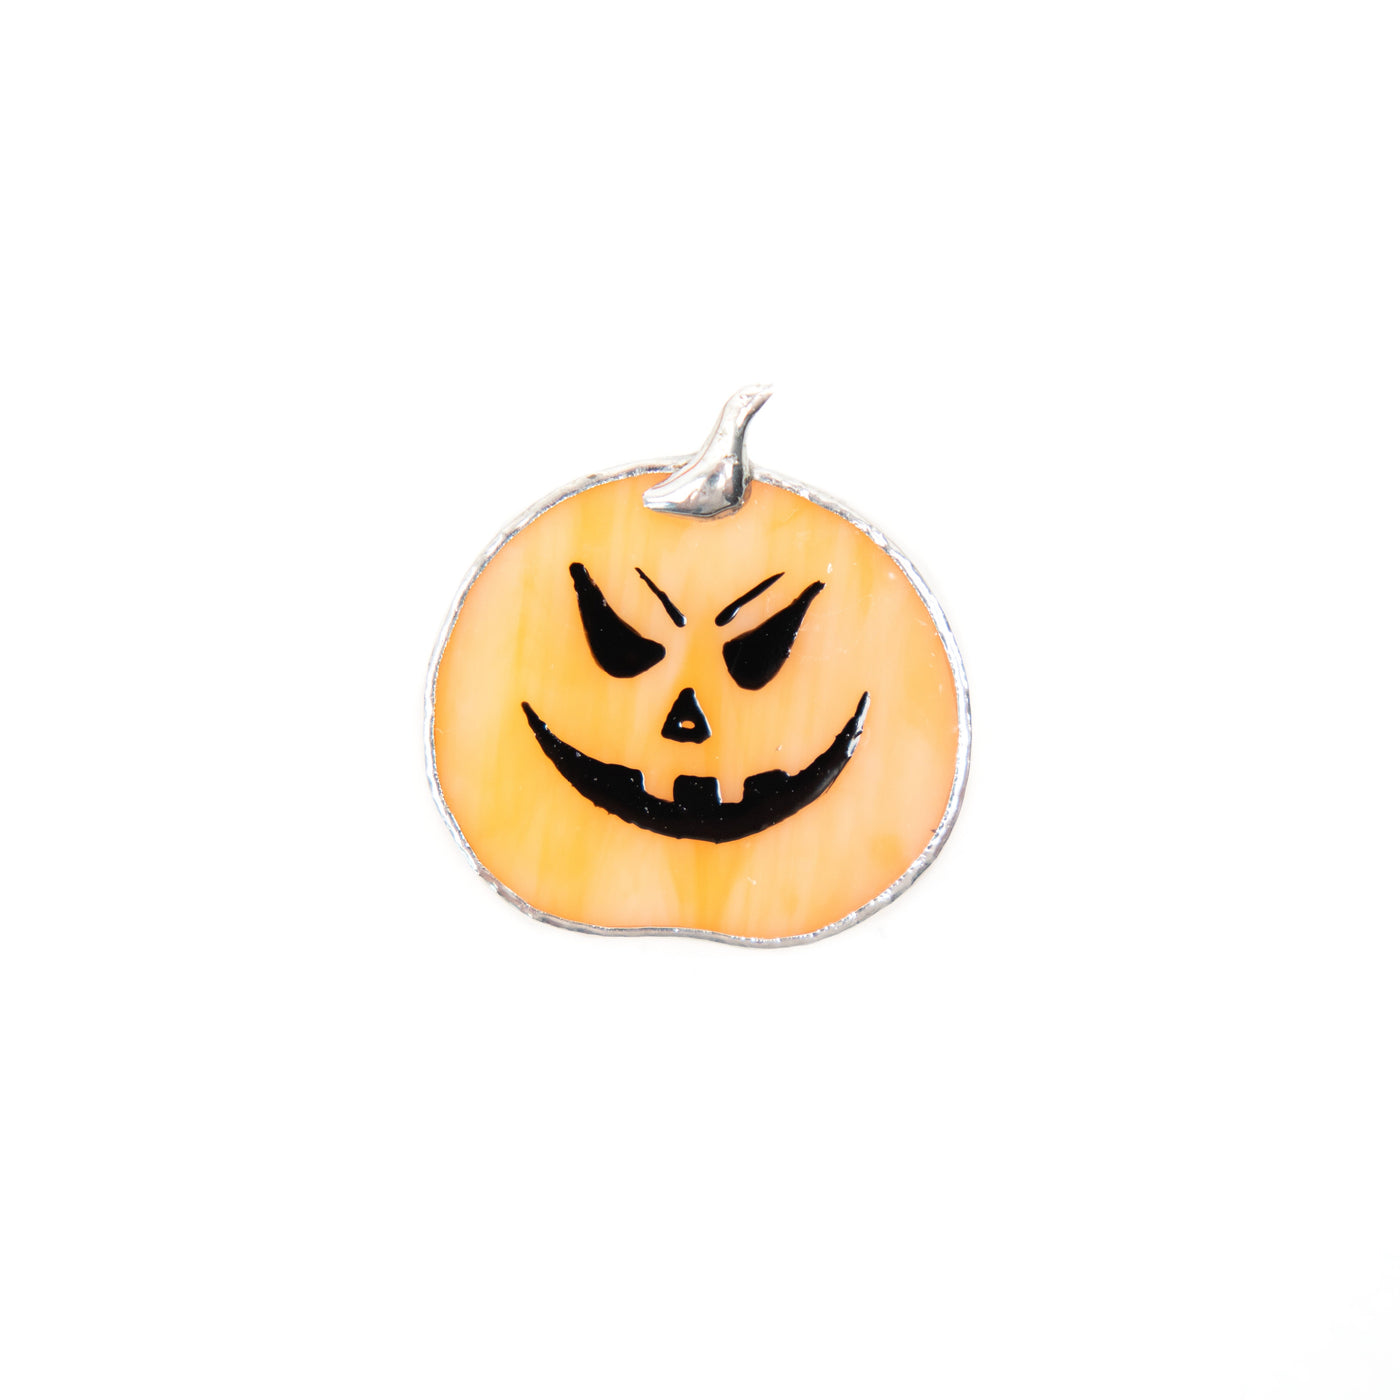 Stained glass pale-orange Halloween pumpkin brooch 